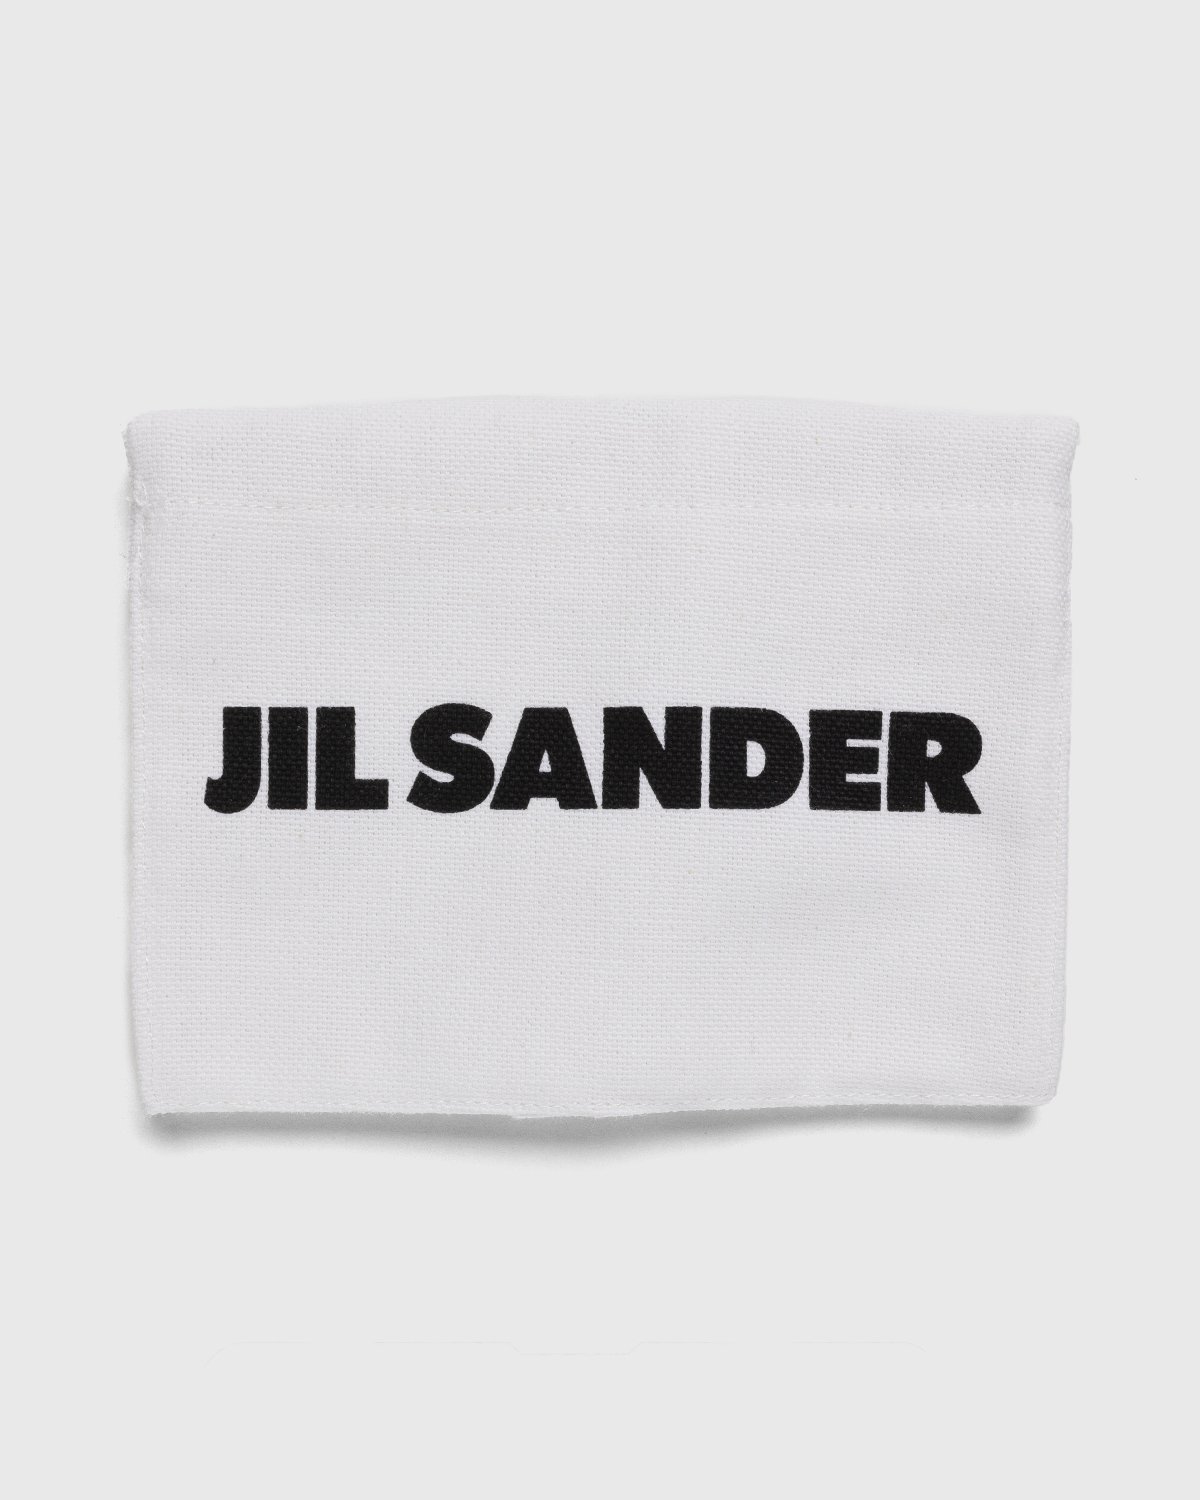 Jil Sander - Leather Phone Holder Pouch Black - Lifestyle - Black - Image 5